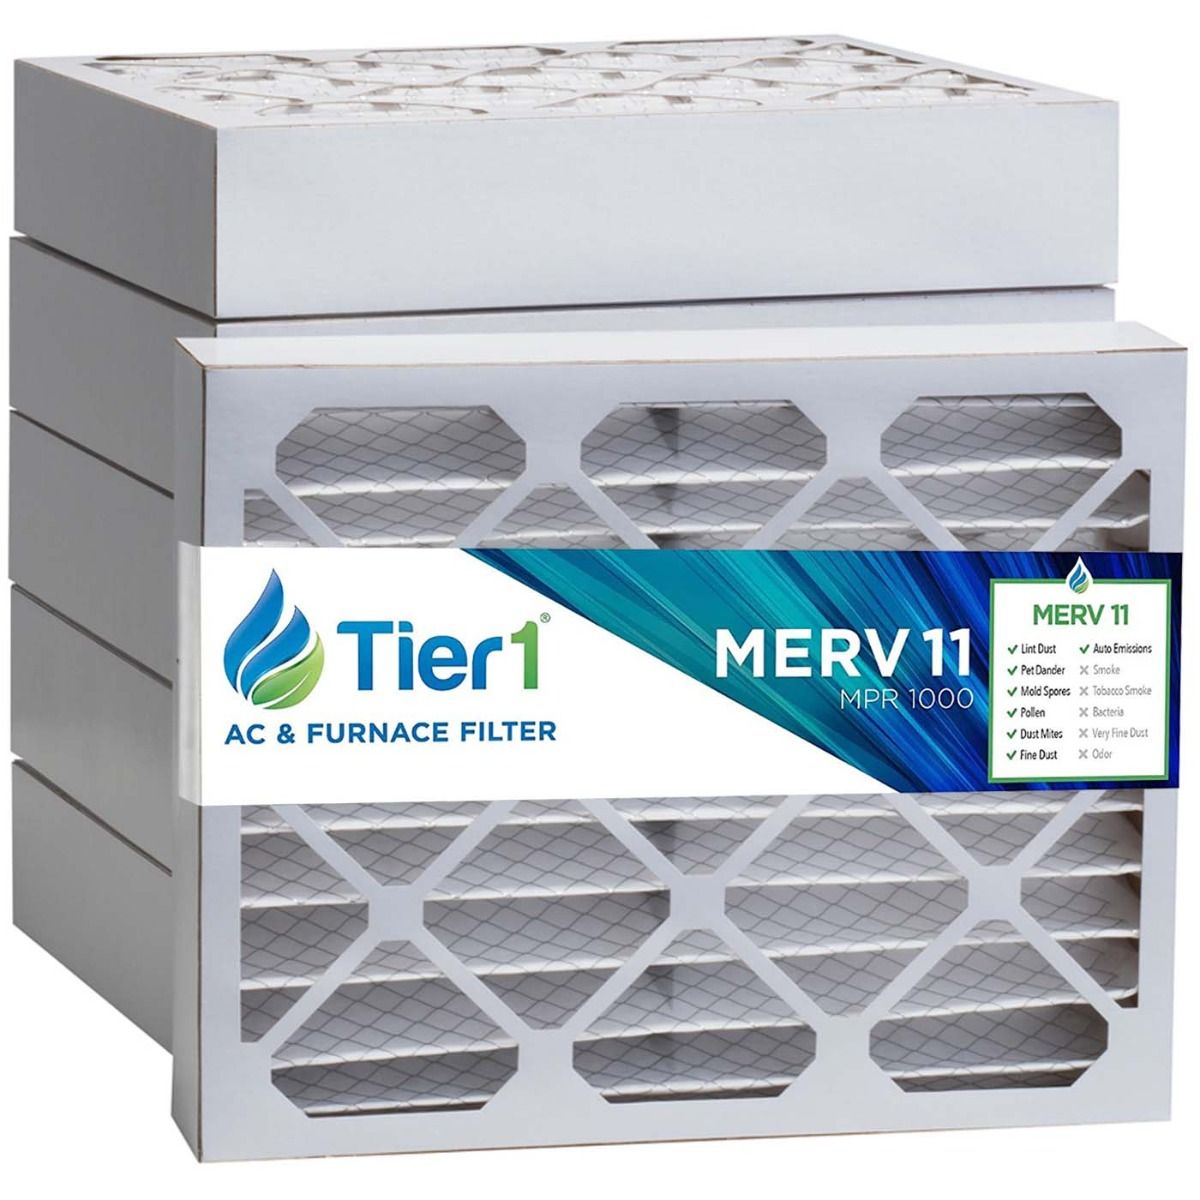 20x25x4 Merv 11 Universal Air Filter By Tier1